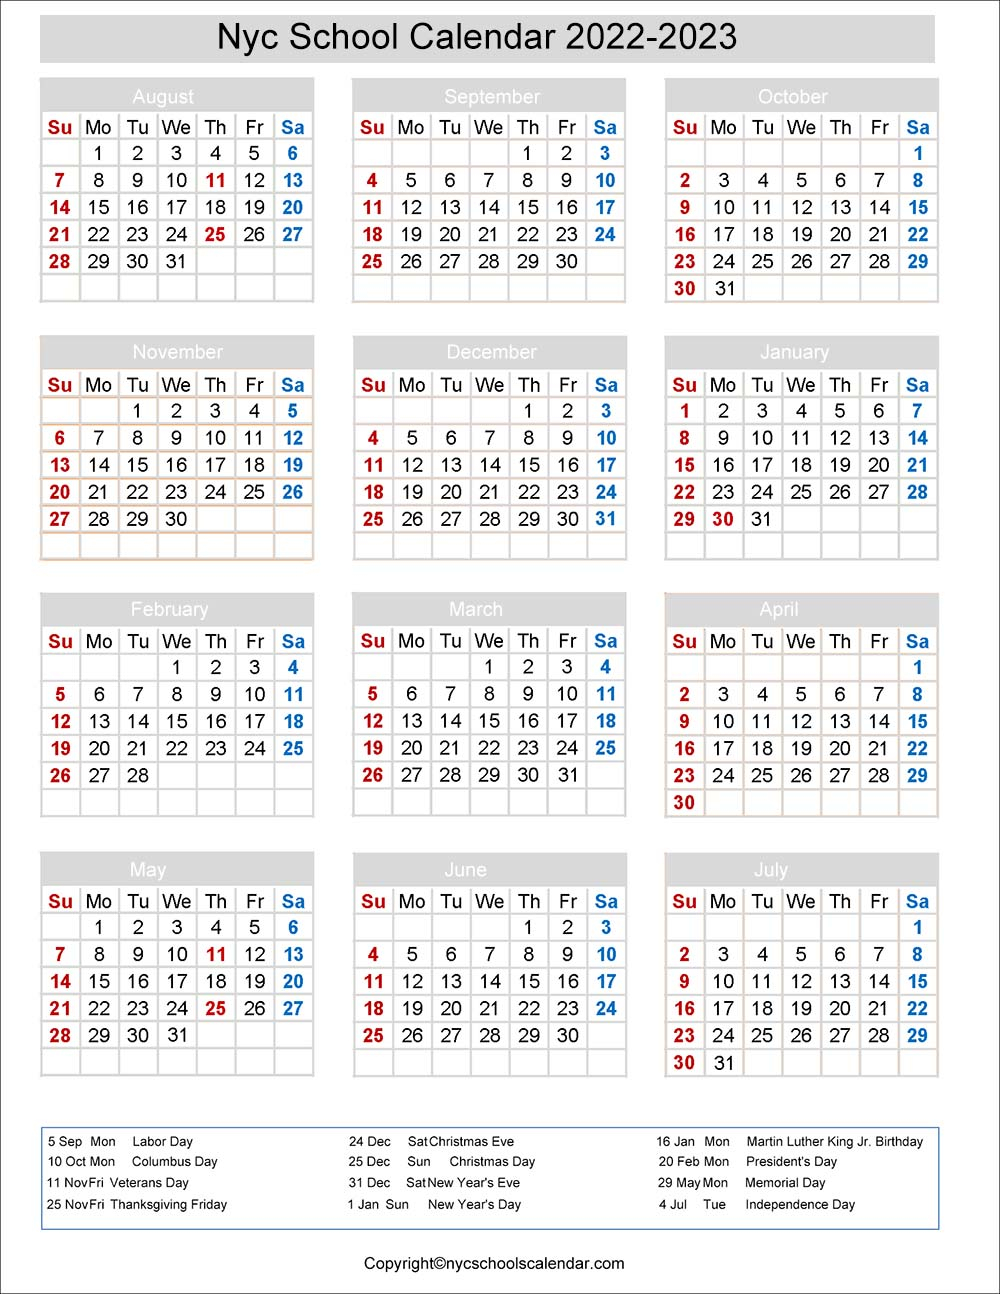 tulane-university-academic-calendar-2022-2023-springcalendars